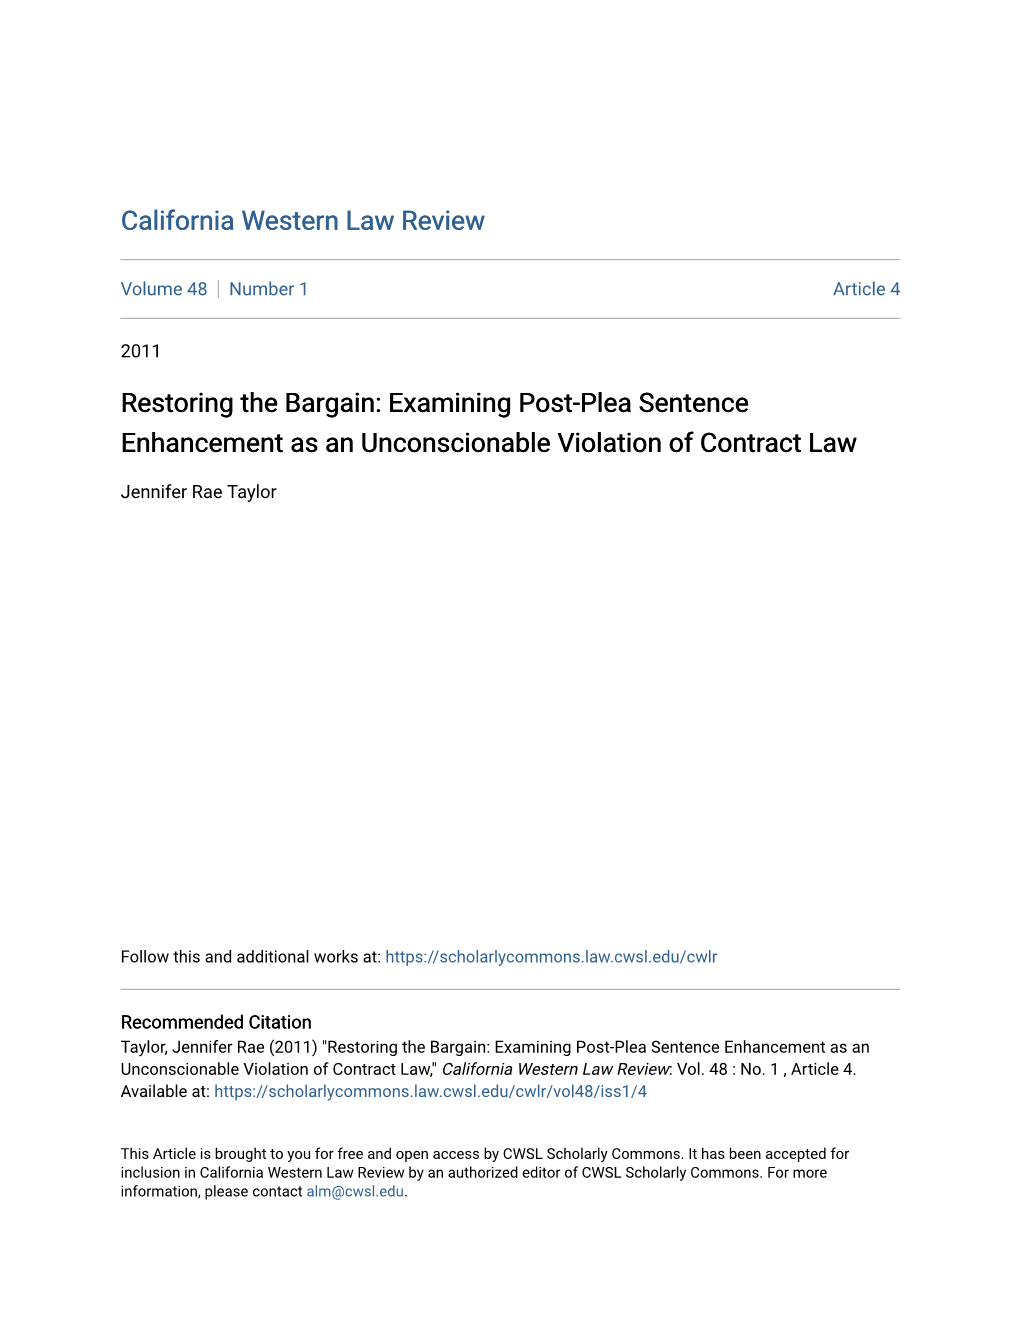 Examining Post-Plea Sentence Enhancement As an Unconscionable Violation of Contract Law